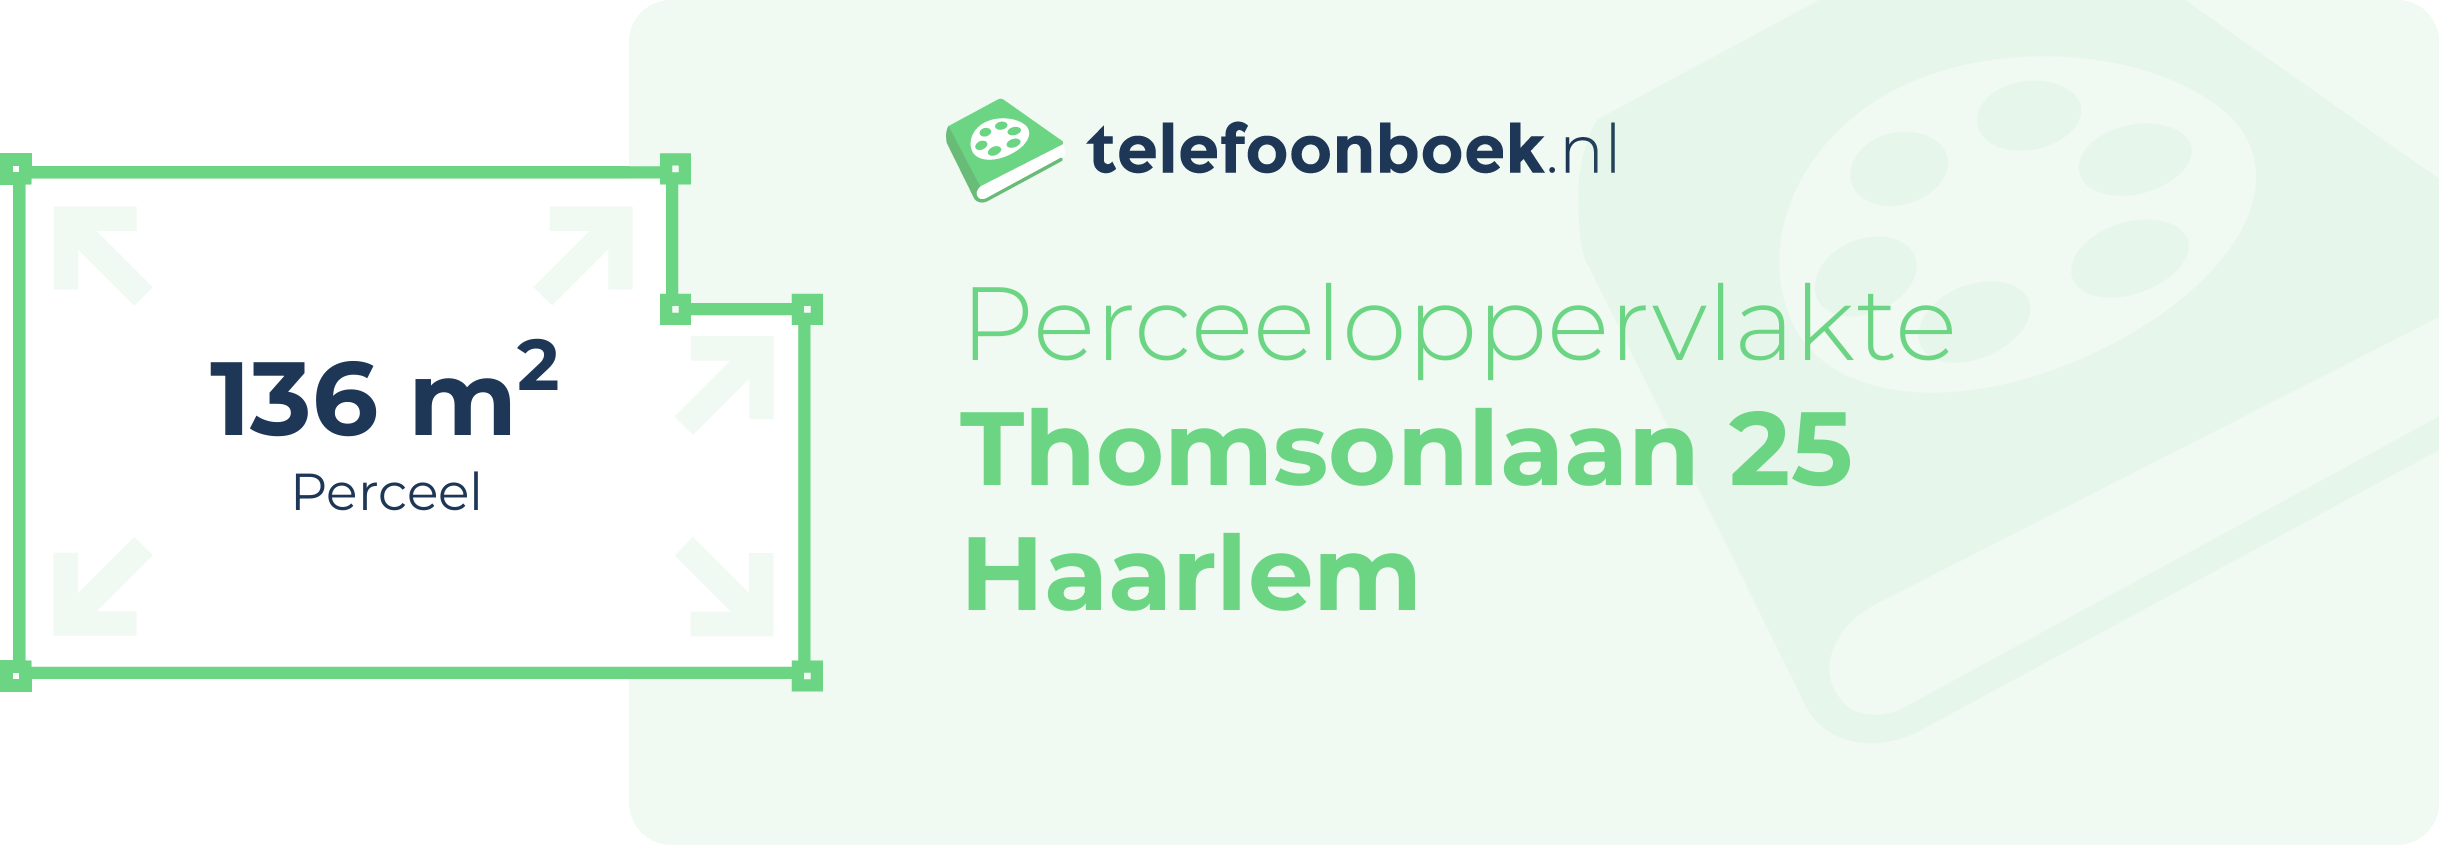 Perceeloppervlakte Thomsonlaan 25 Haarlem